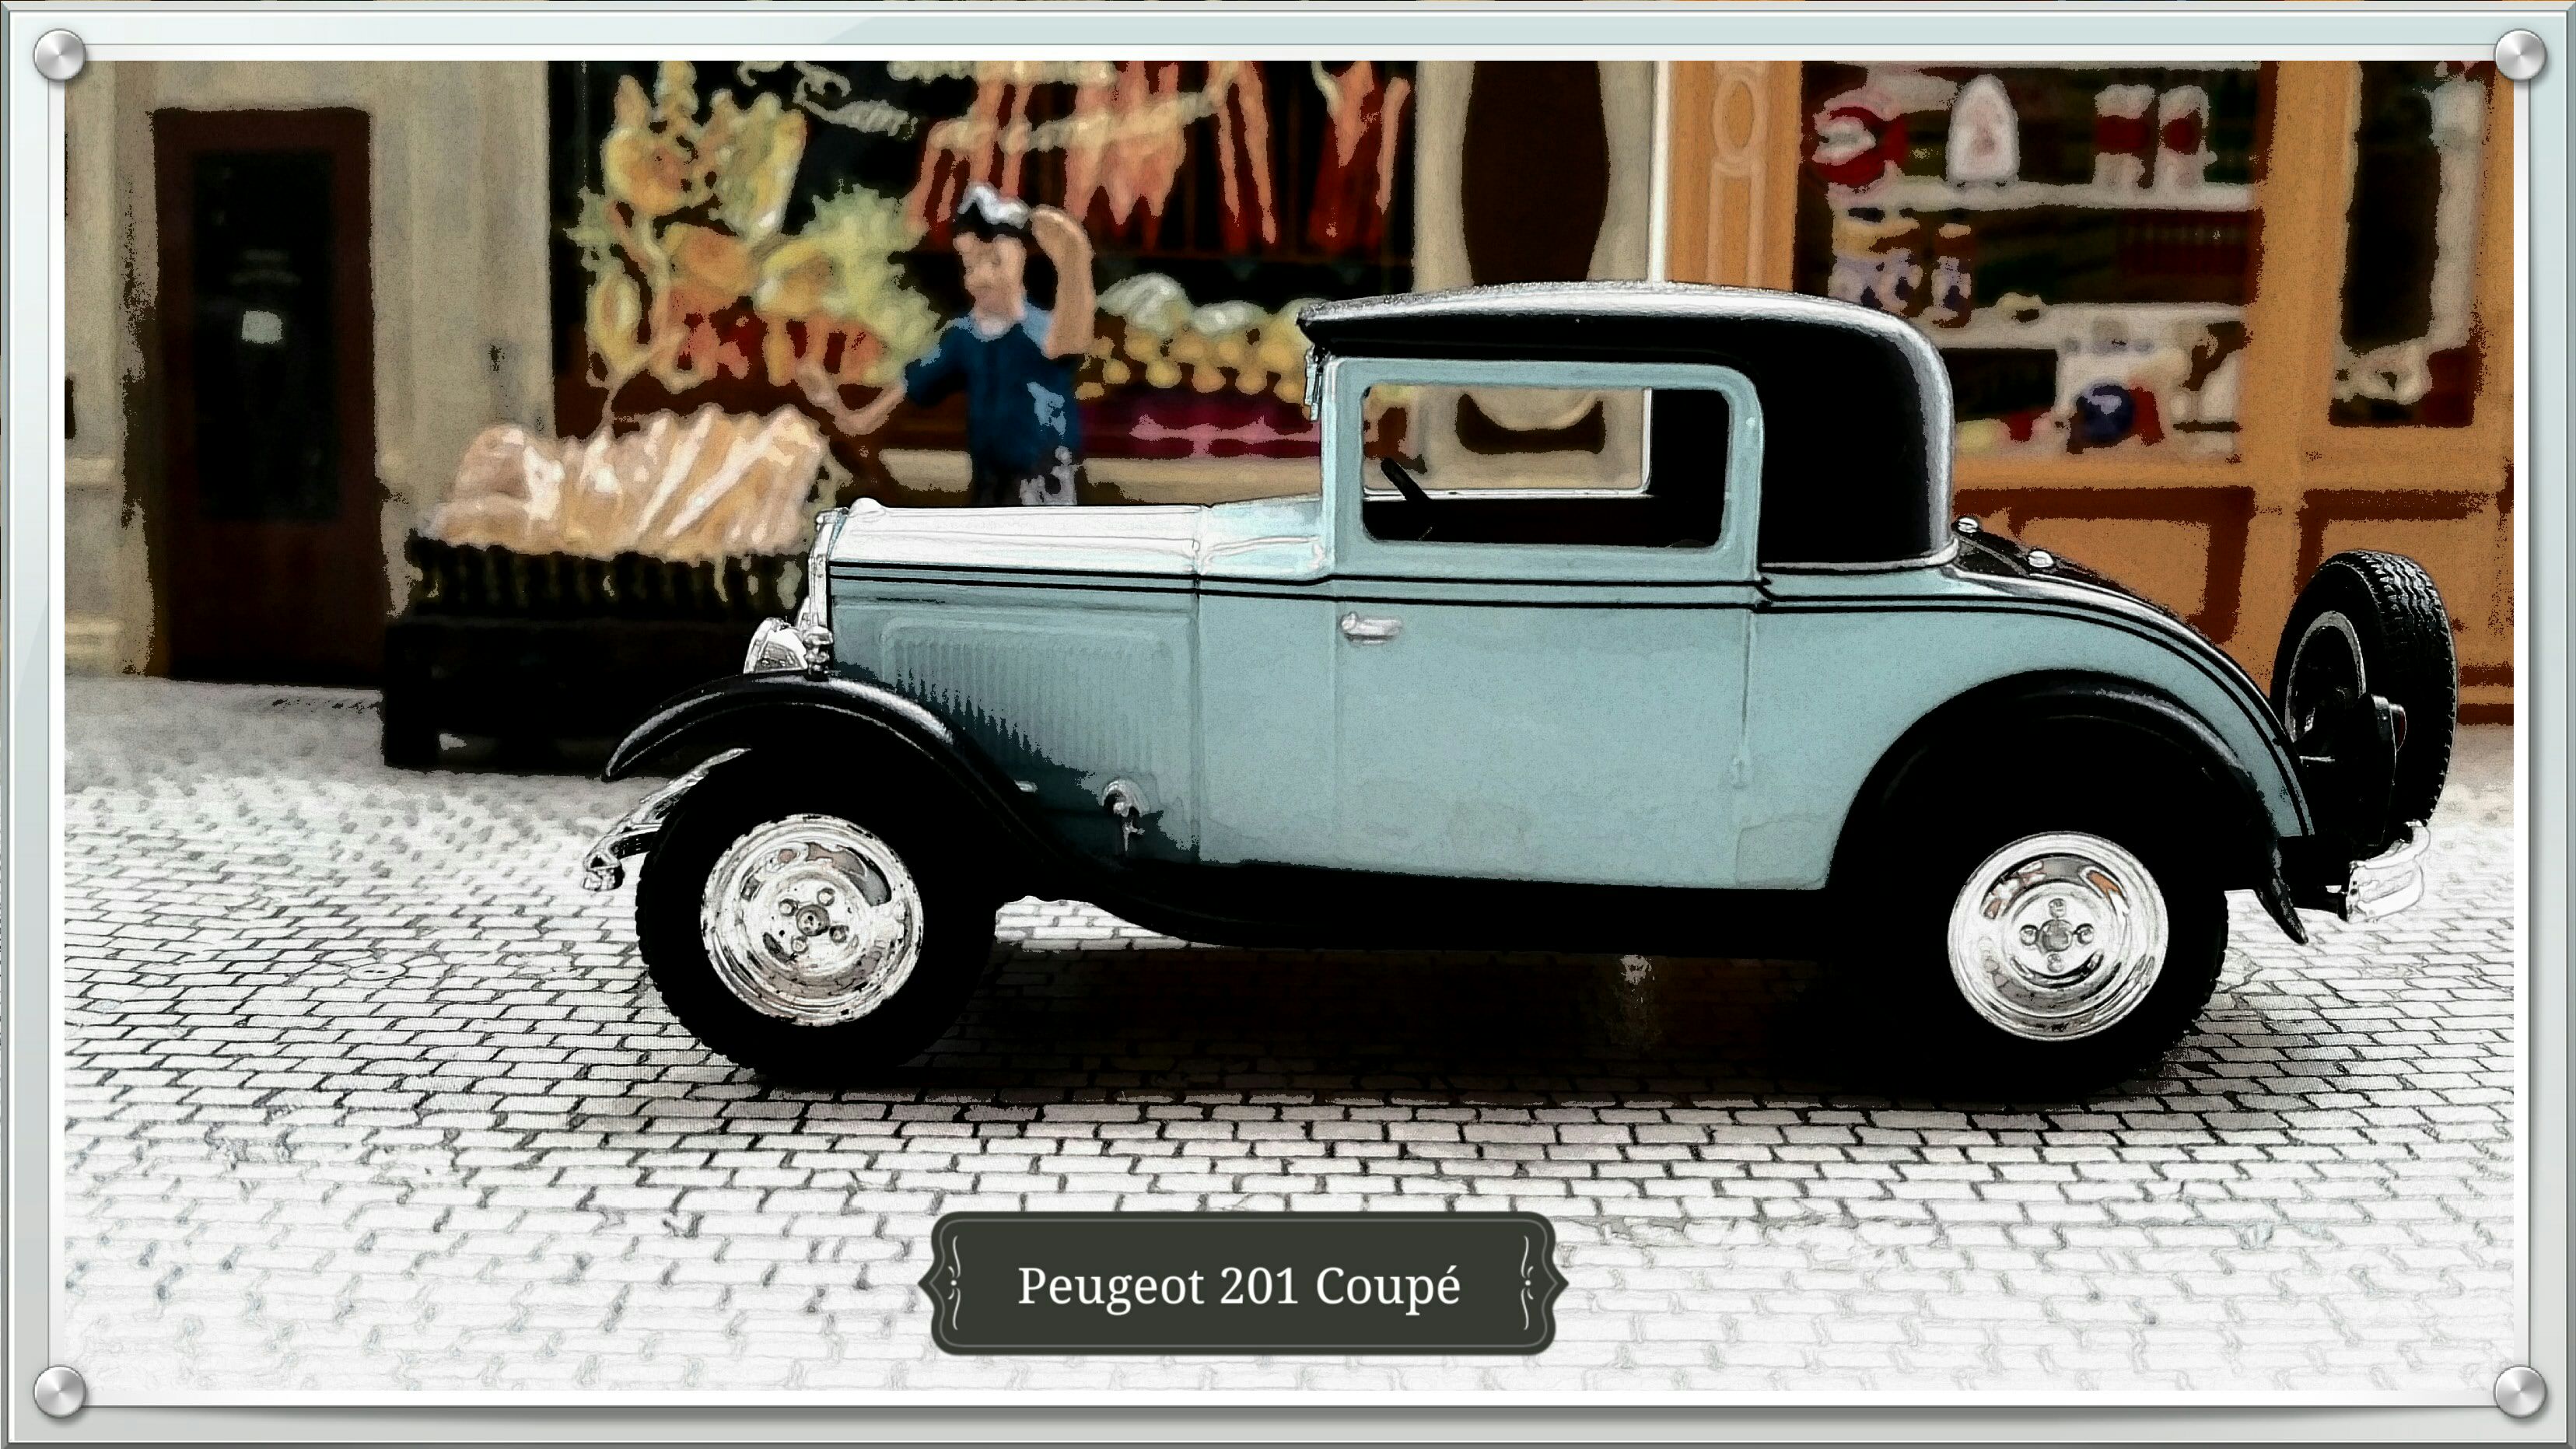 Peugeot 201 Coupé - Collection Peugeot toy car collectible - Main Image 2